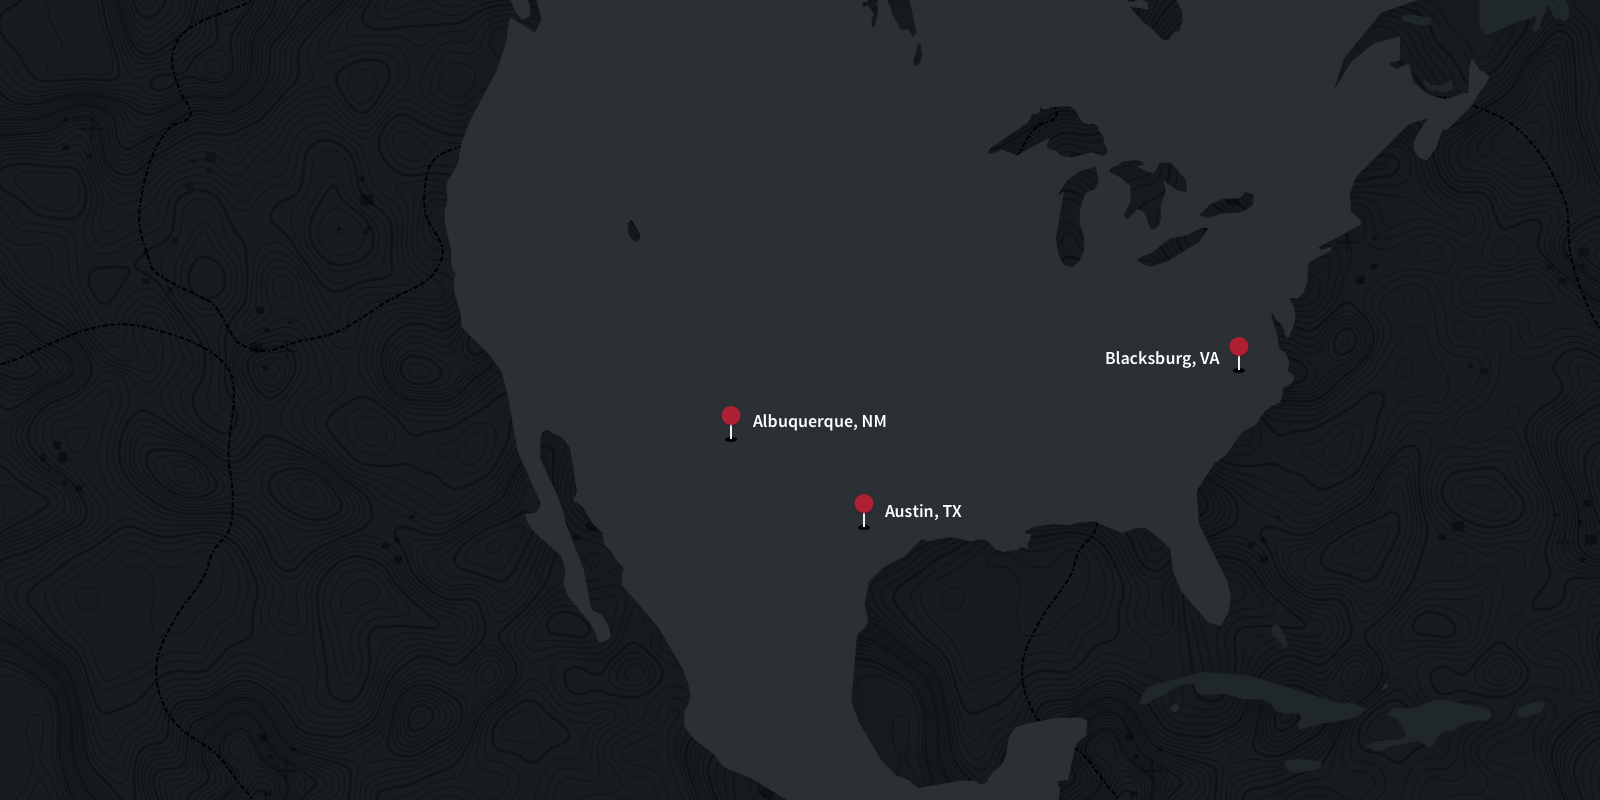 Torc Location pins for Blacksburg, Albuquerque, and Austin